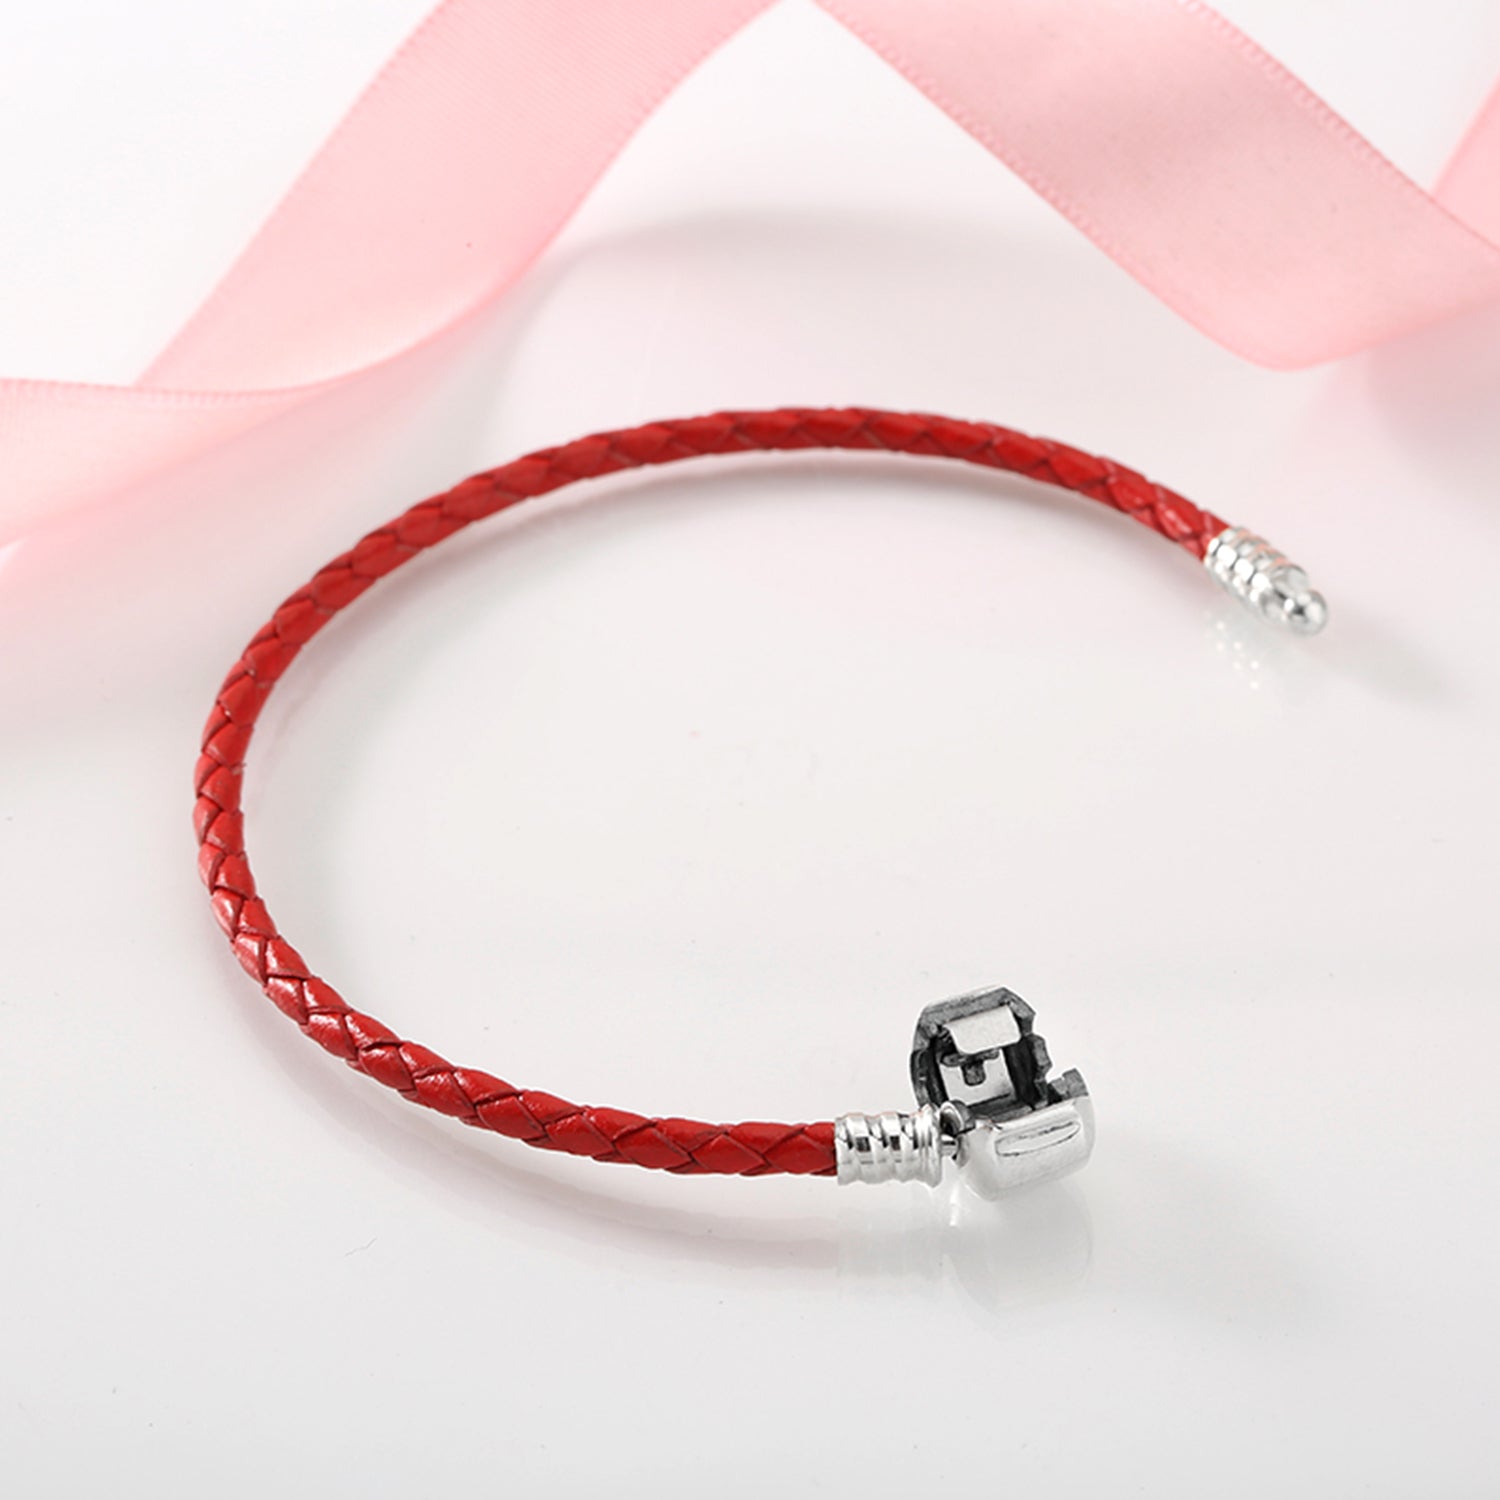 Red leather bracelet